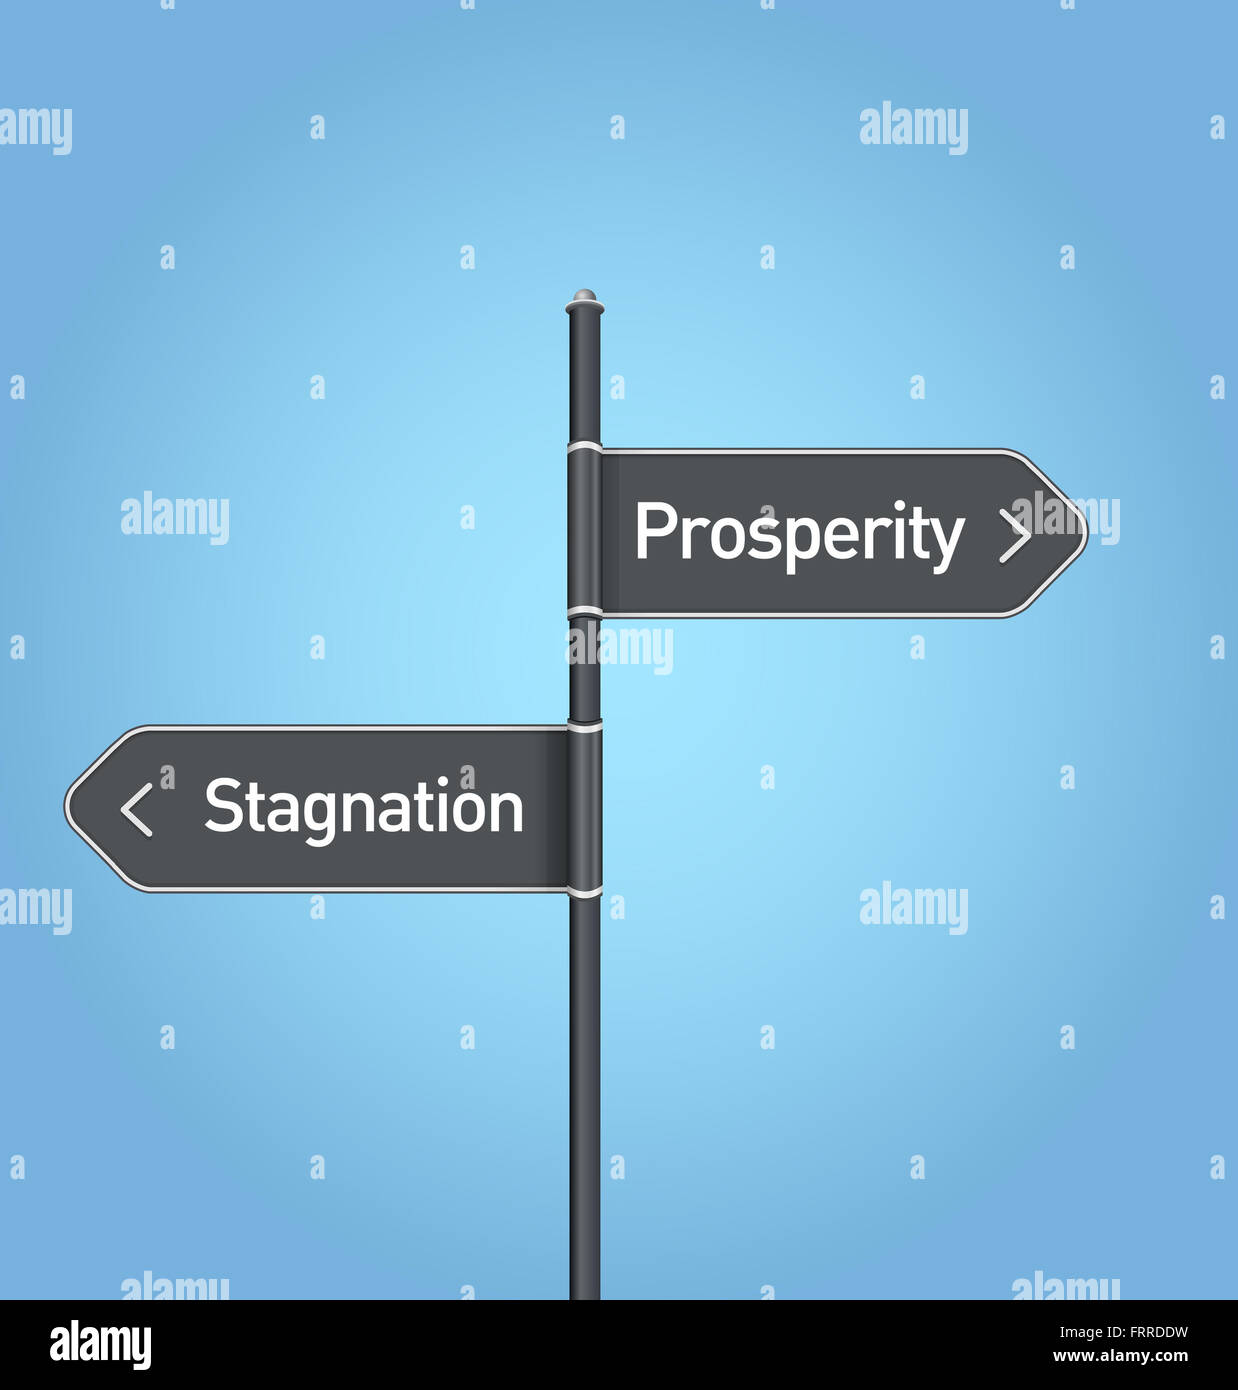 Prosperity vs stagnation choice road sign concept, flat design Stock Photo